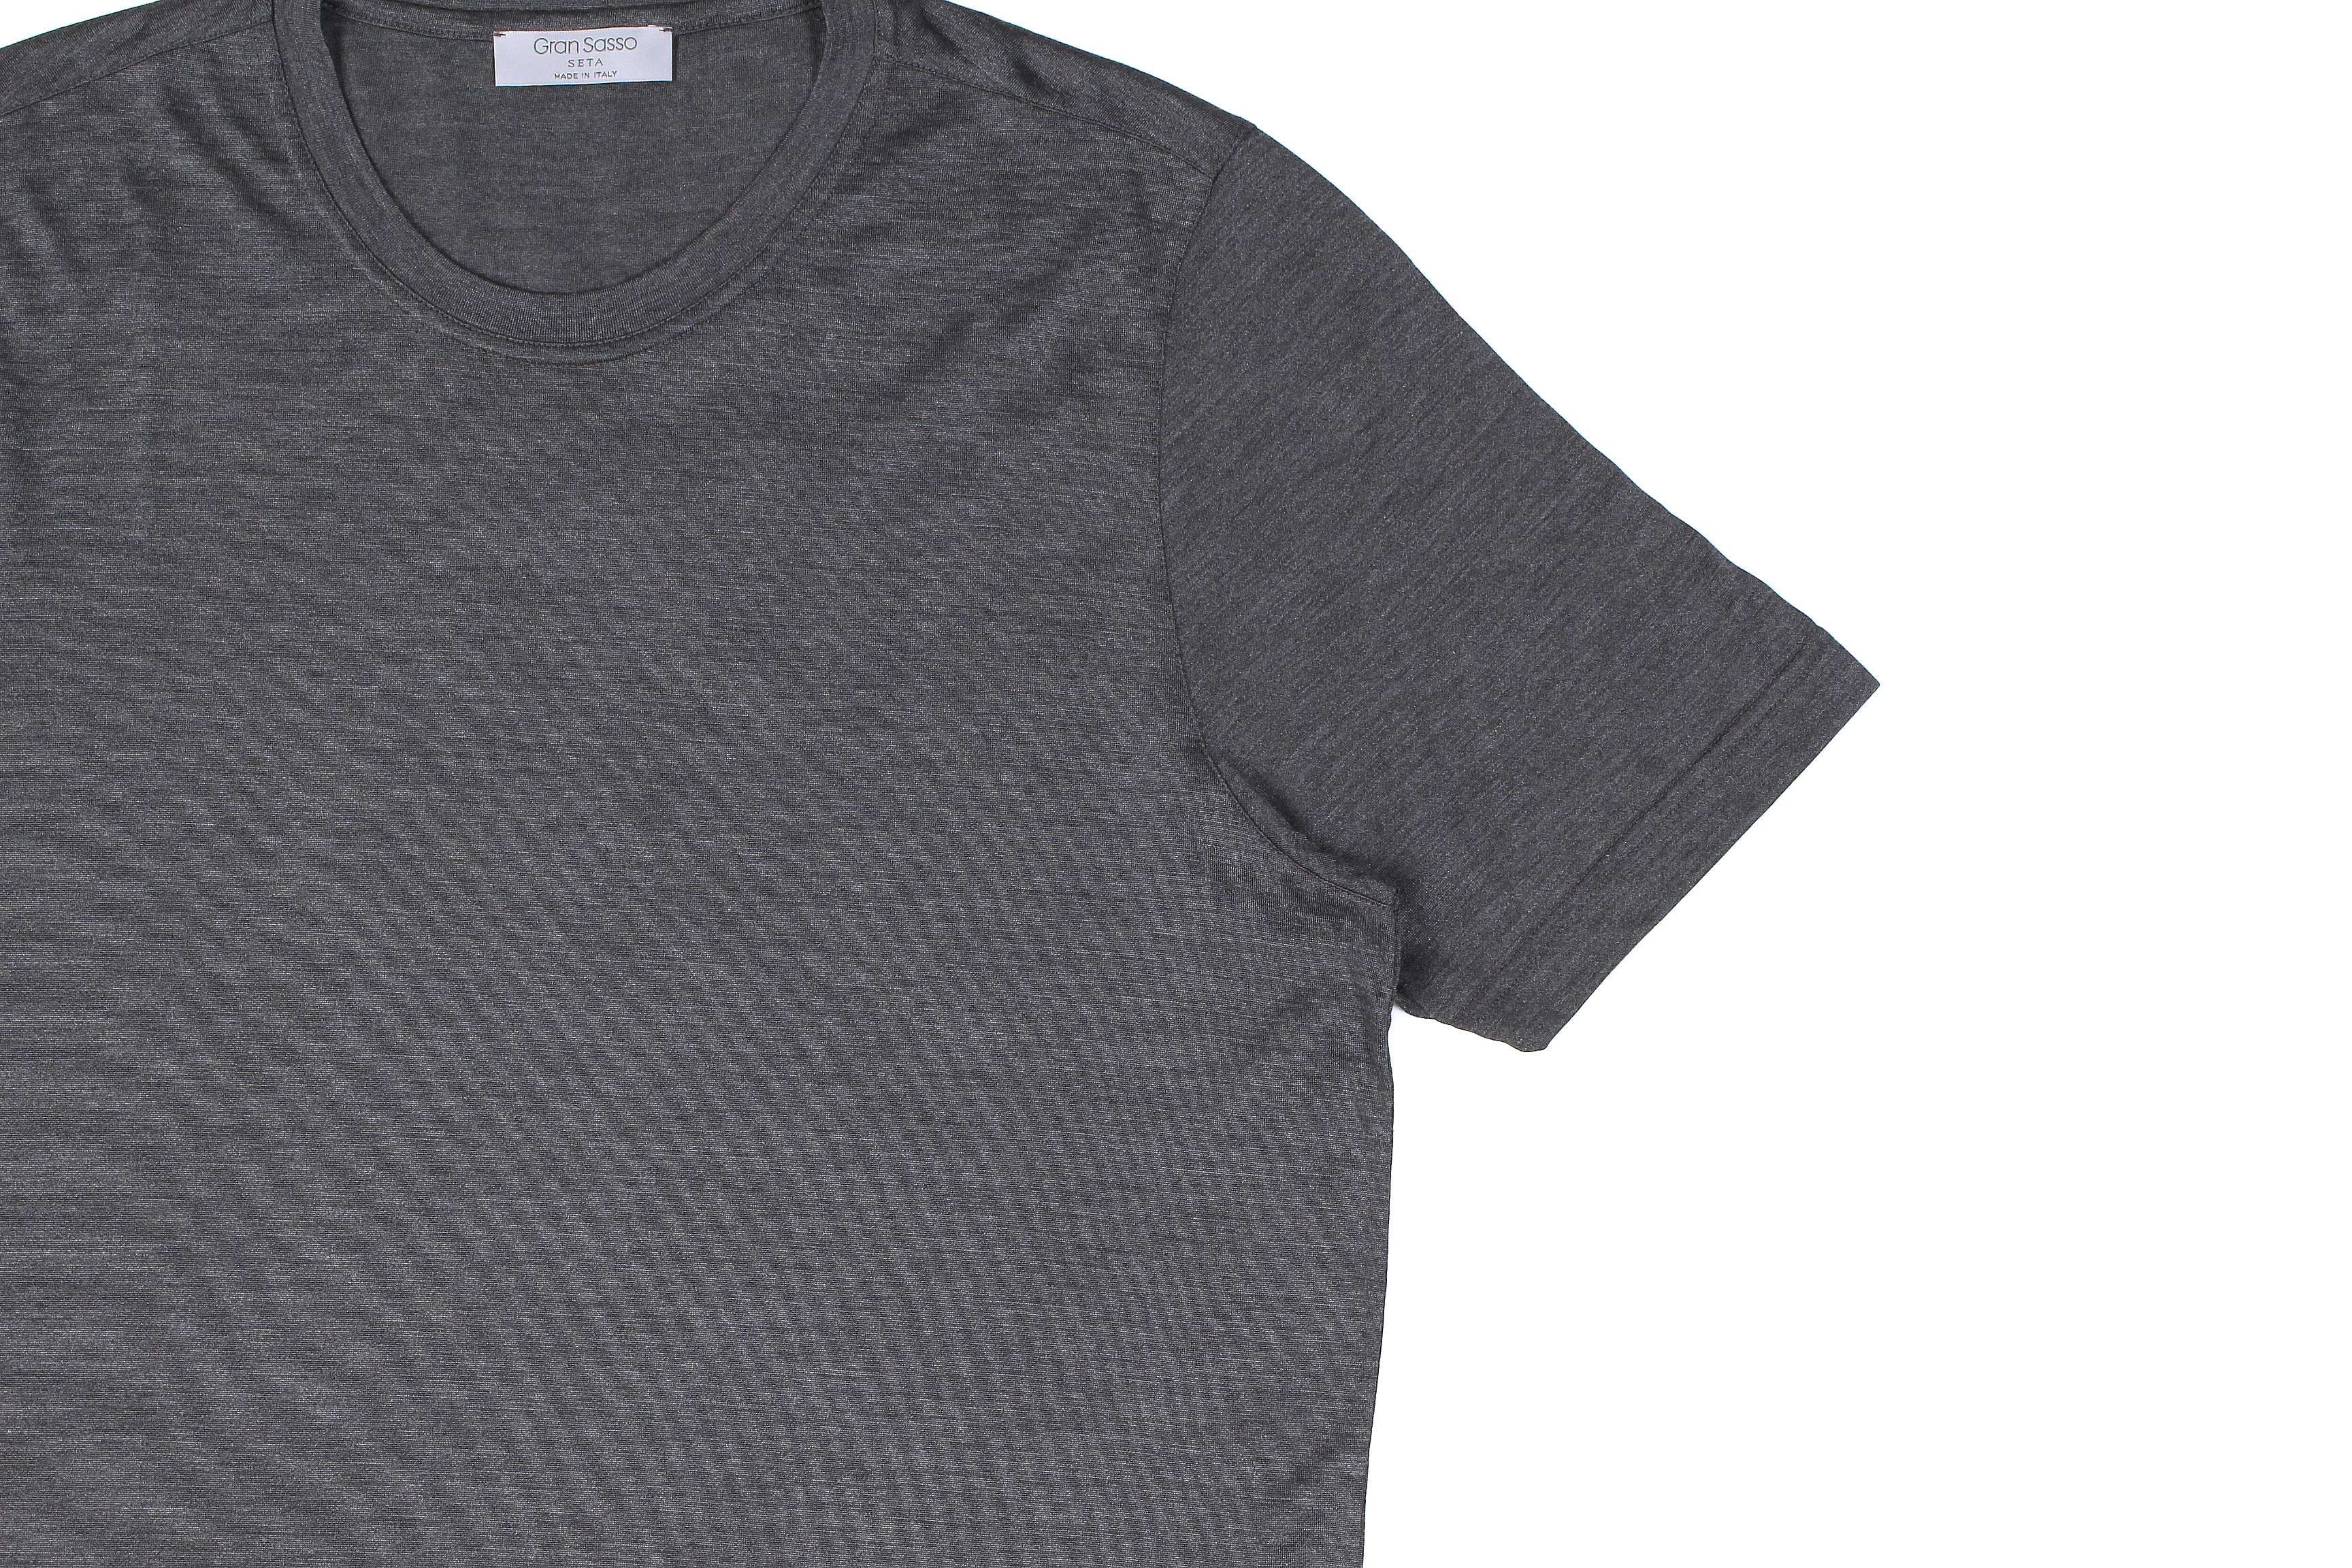 Gran Sasso (グランサッソ) Silk T-shirt (シルク Tシャツ) SETA (シルク 100%) ショートスリーブ シルク Tシャツ GREY (グレー・264) made in italy (イタリア製) 2021 春夏新作 愛知 名古屋 Alto e Diritto altoediritto アルトエデリット